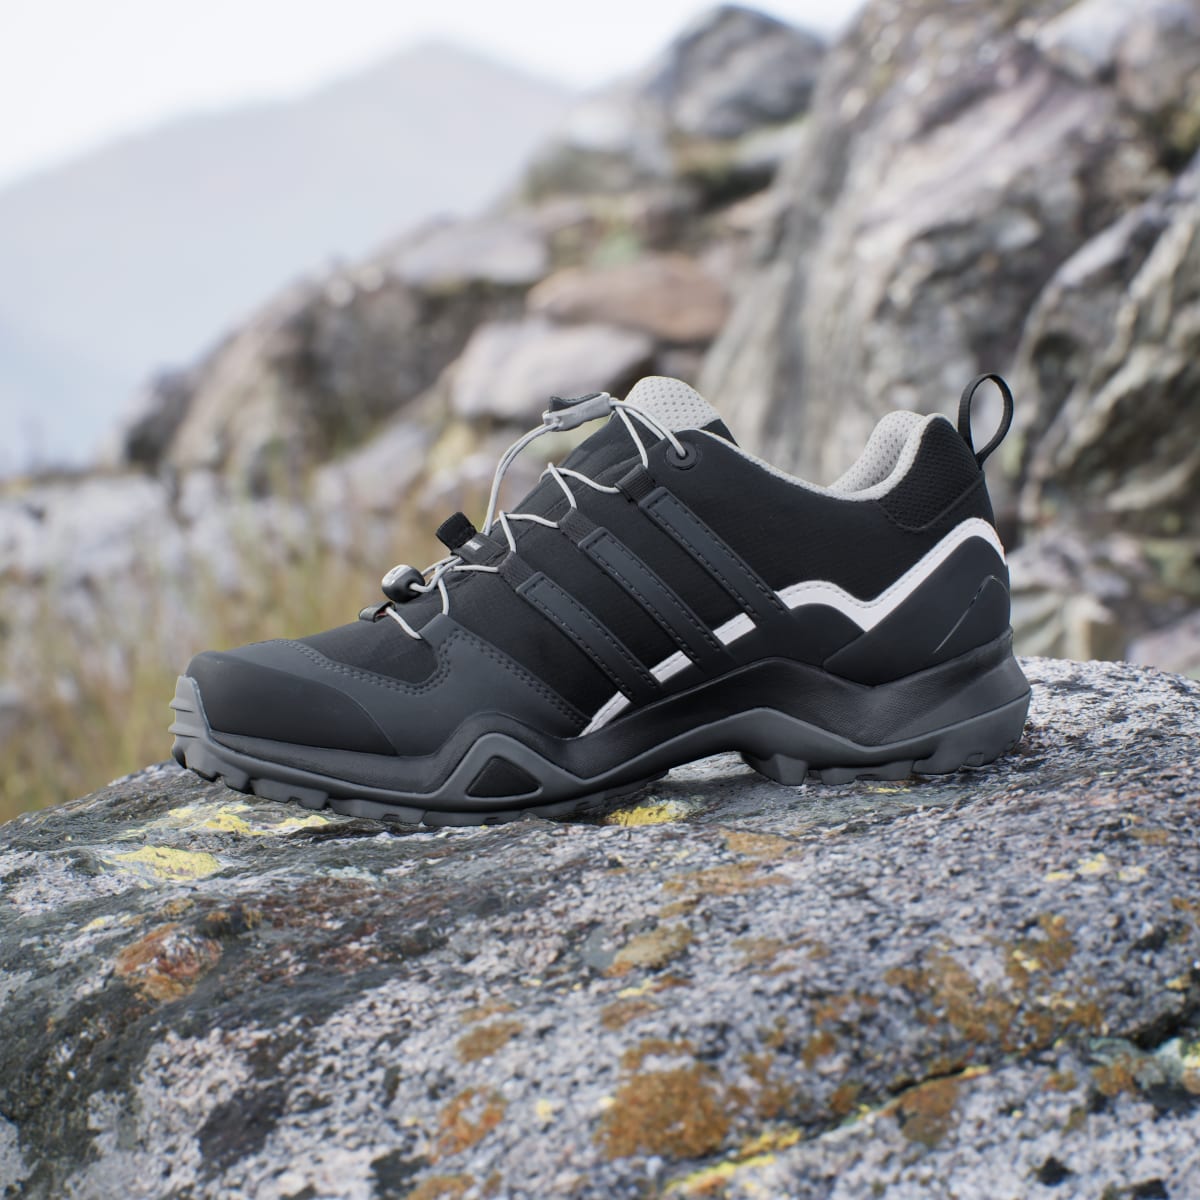 Adidas Terrex Swift R2 GORE-TEX Hiking Shoes. 7